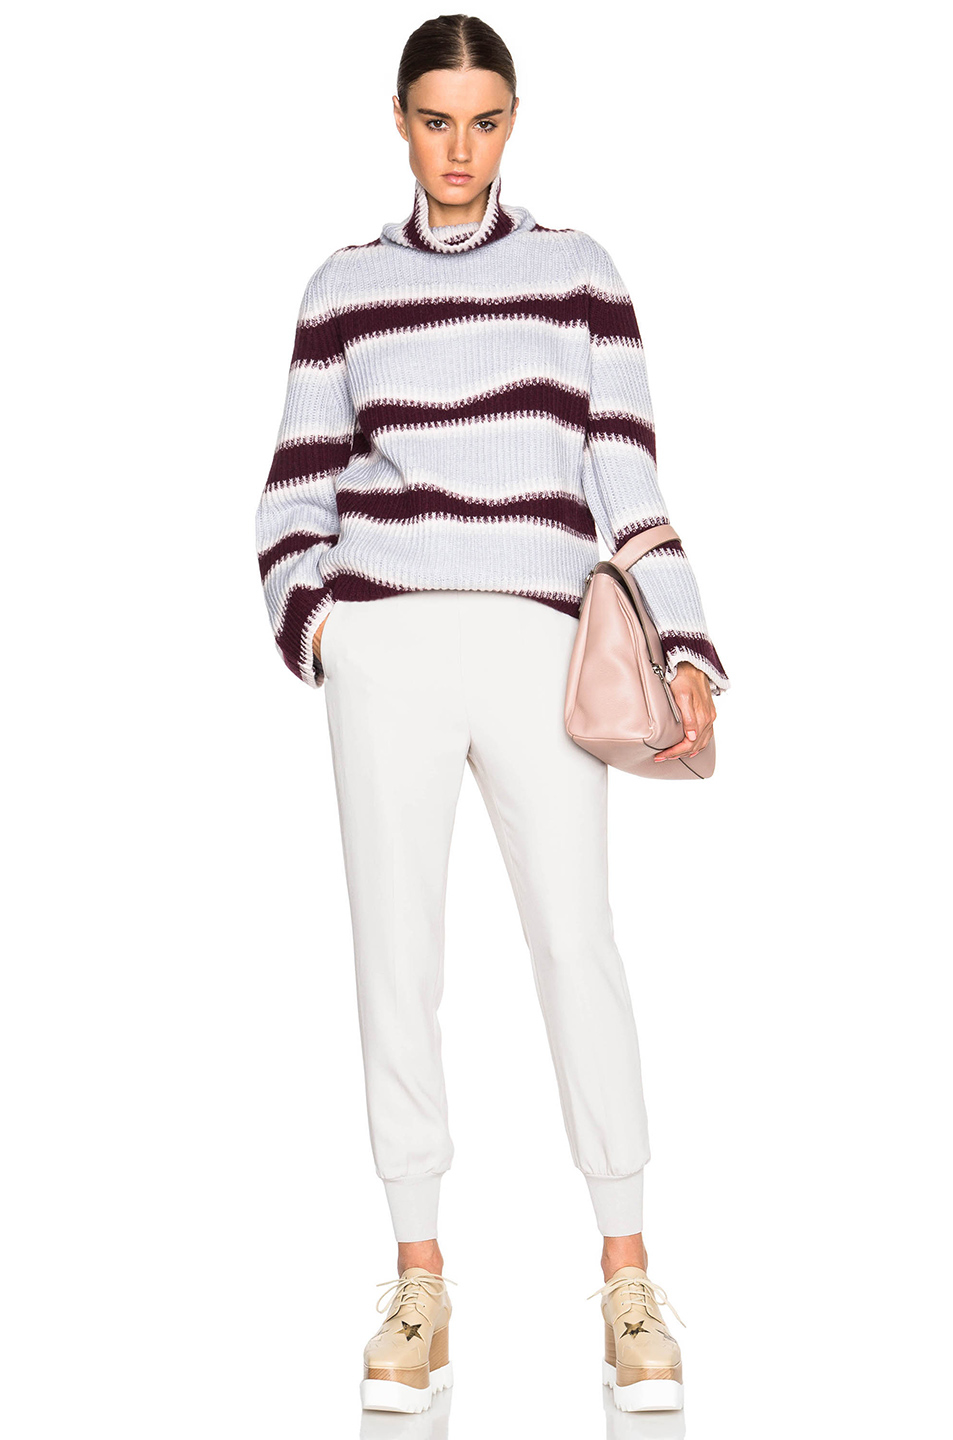 Lyst - Kenzo Abstract Striped Wool Sweater in Purple